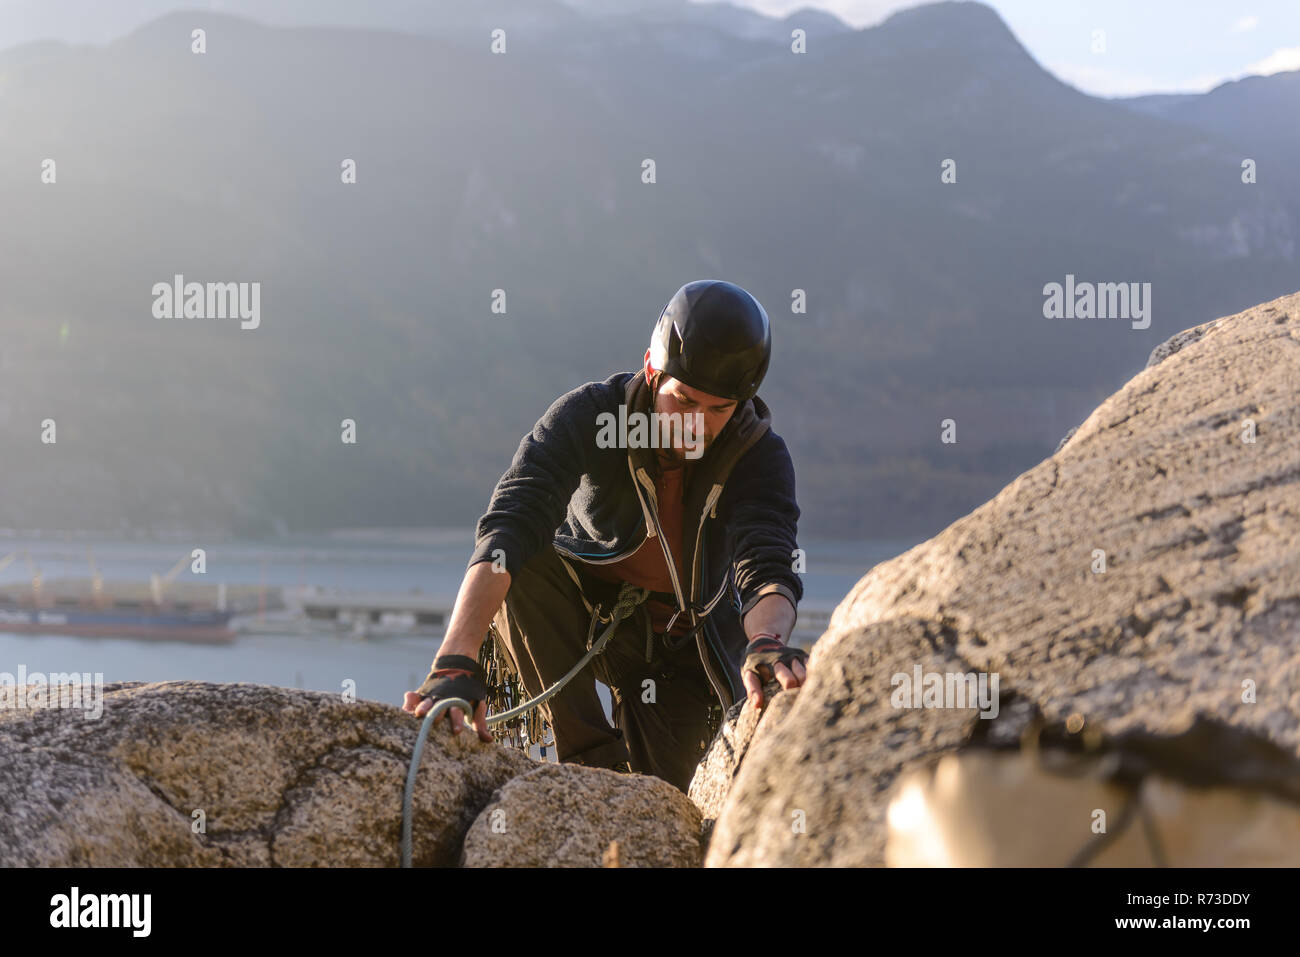 Rock climber using safety harness ropes, Malamute, Squamish, Canada Stock Photo